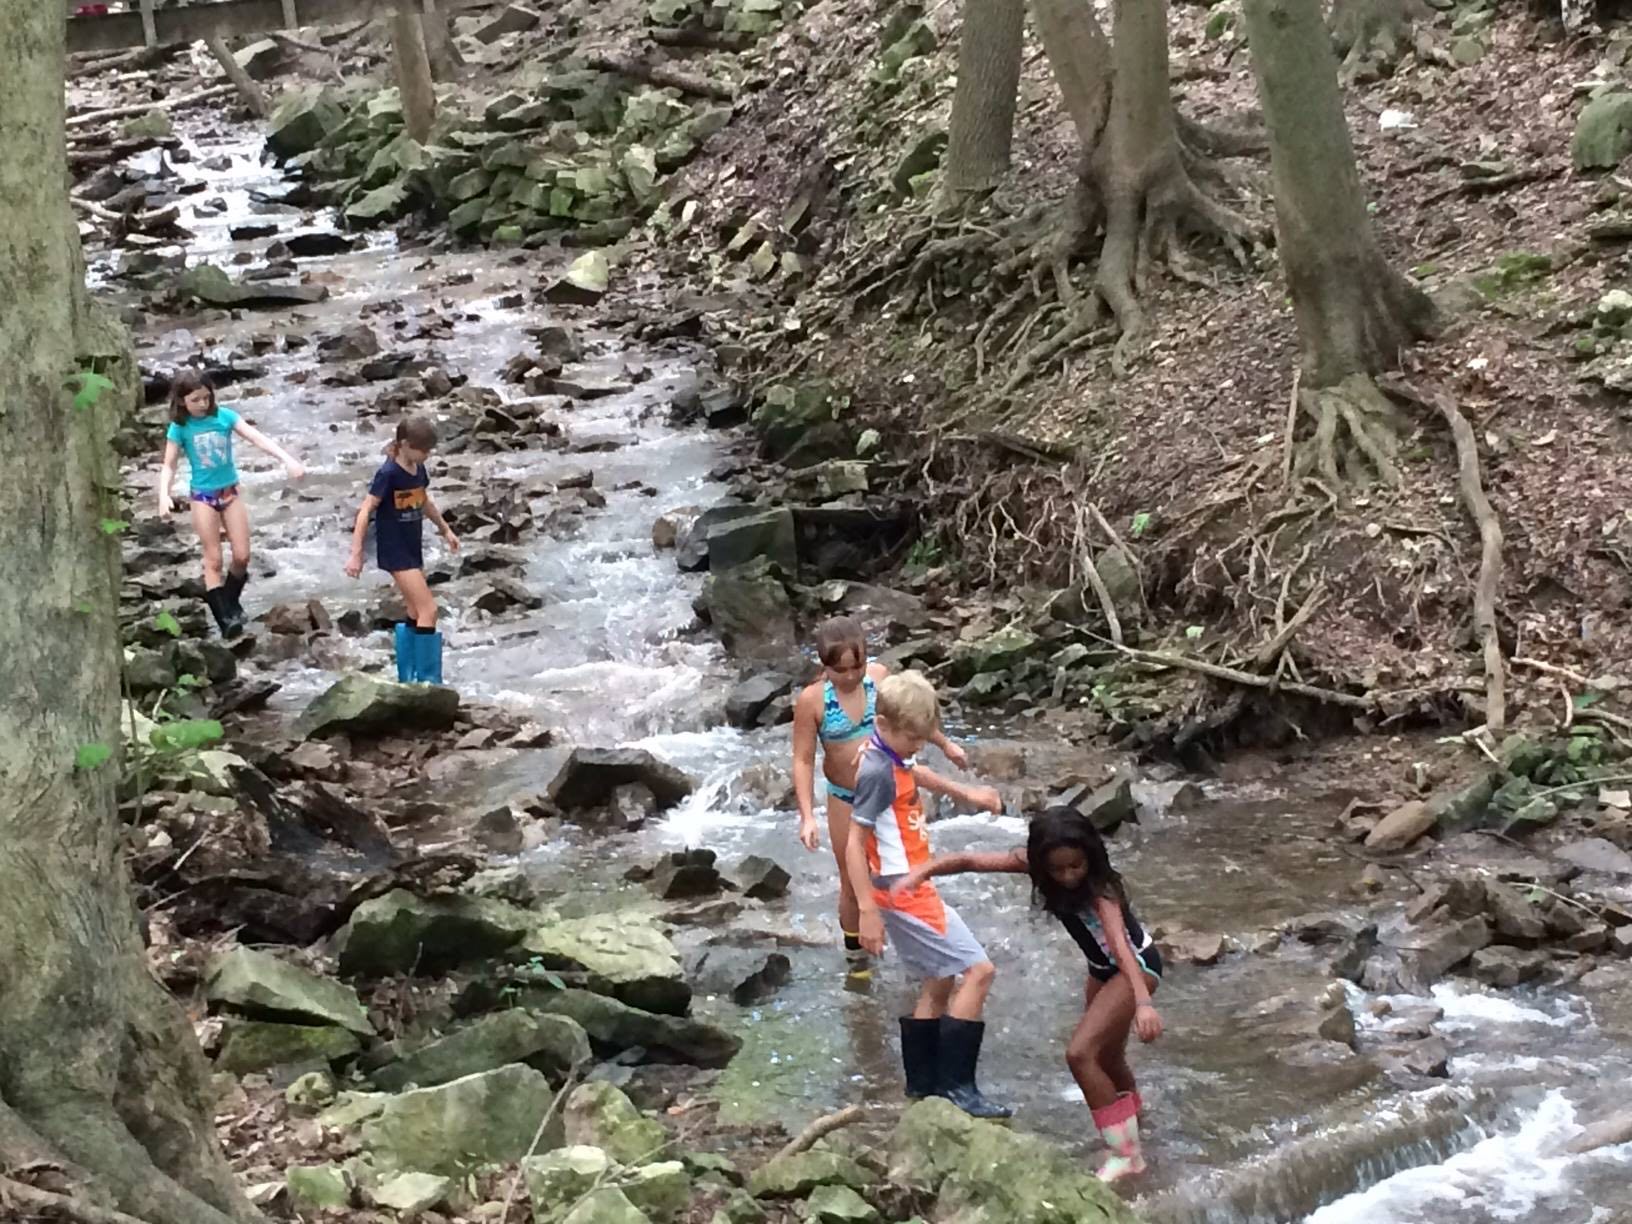 Exploring the creek. Photo: Canterbury Hills Camp staff